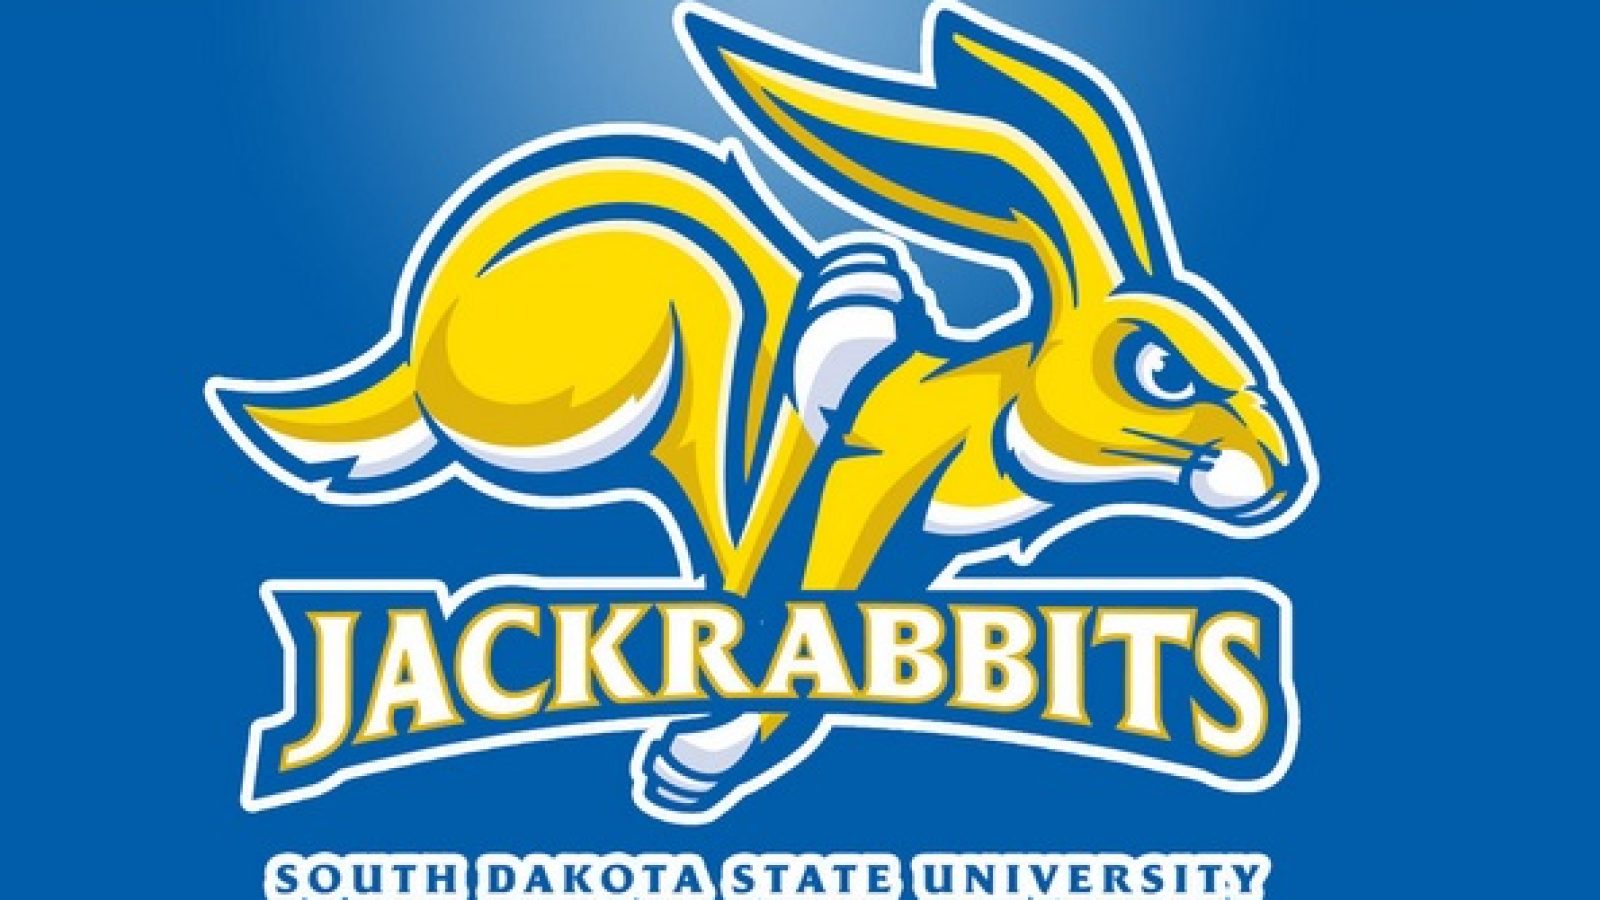 SDSU-Jackrabbits-w-blue-background-1